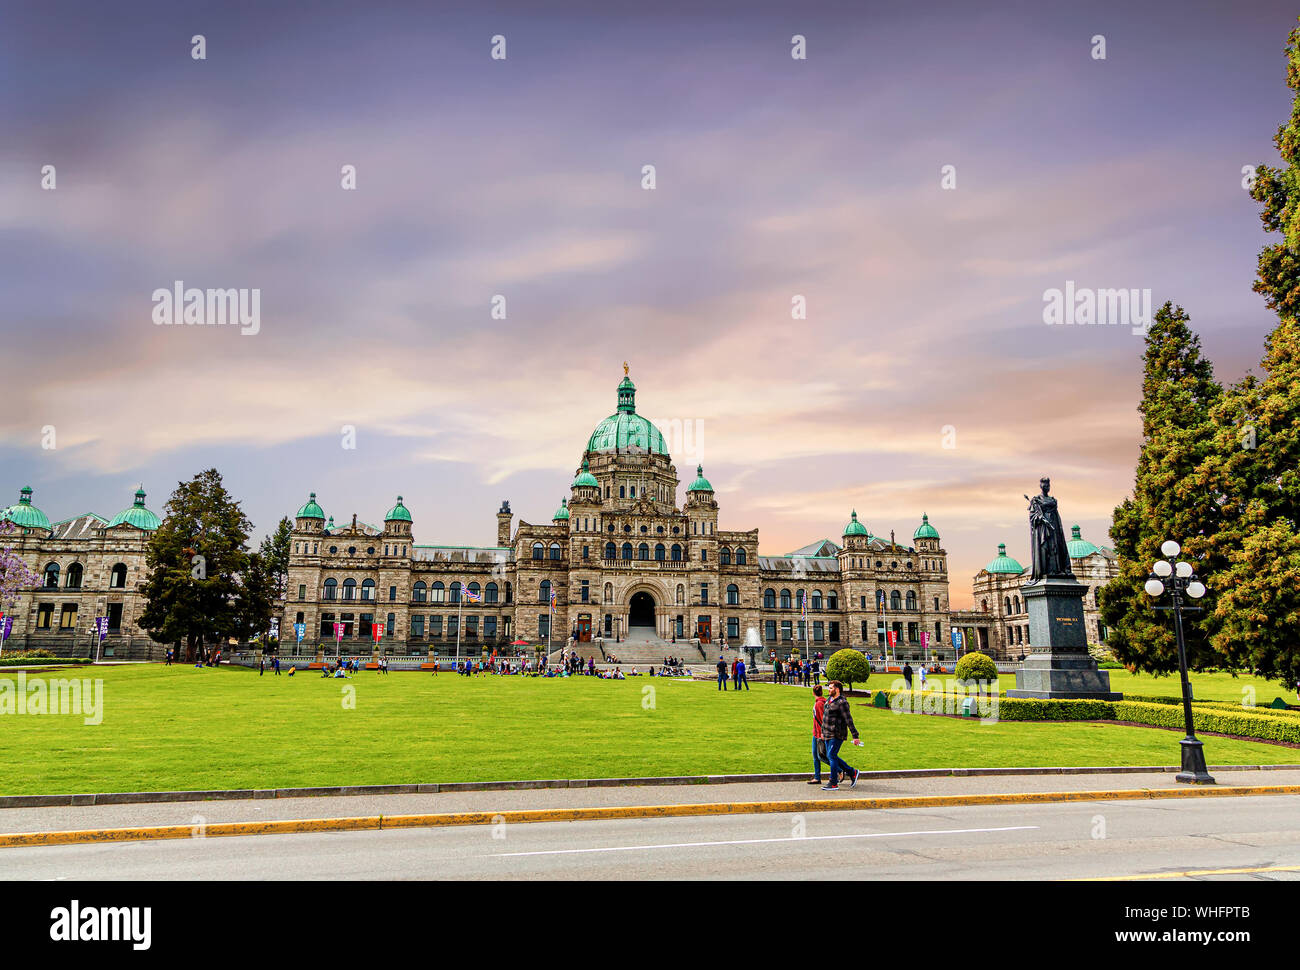 The beautiful parliament building in Victoria, British Columbia Stock Photo